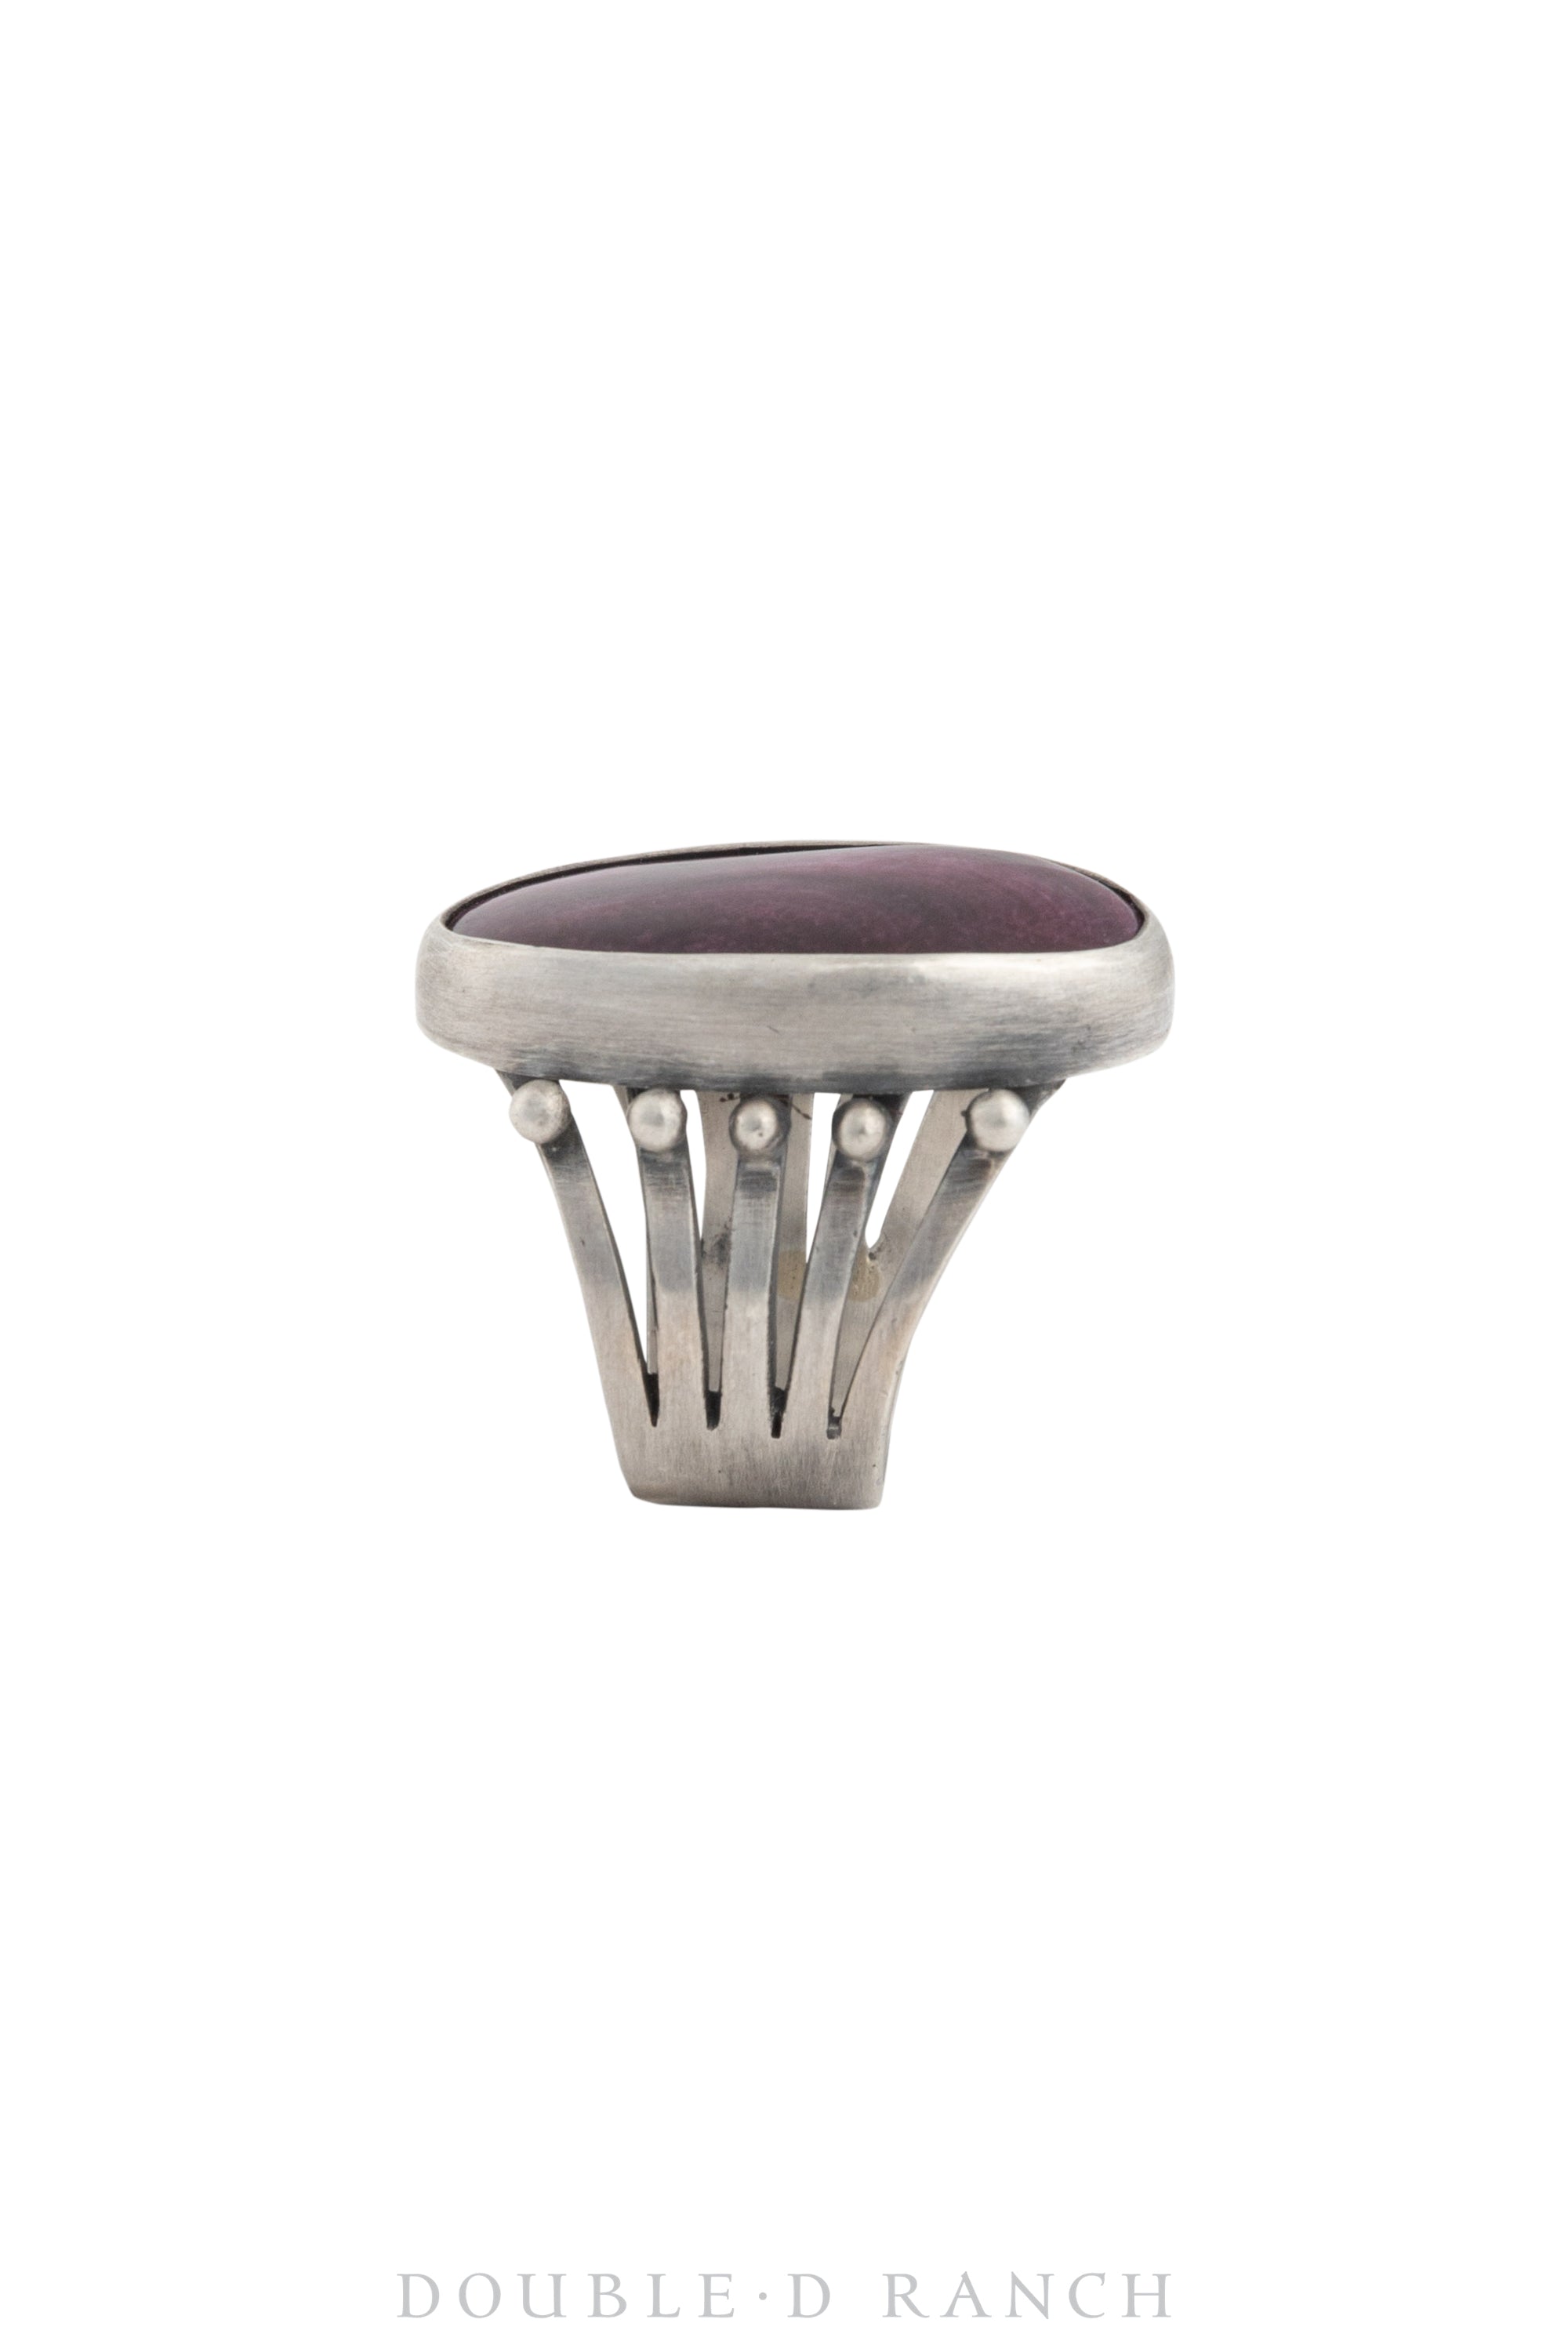 Ring, Purple Spiny Oyster, Nomad, Hallmark, Contemporary, 1353